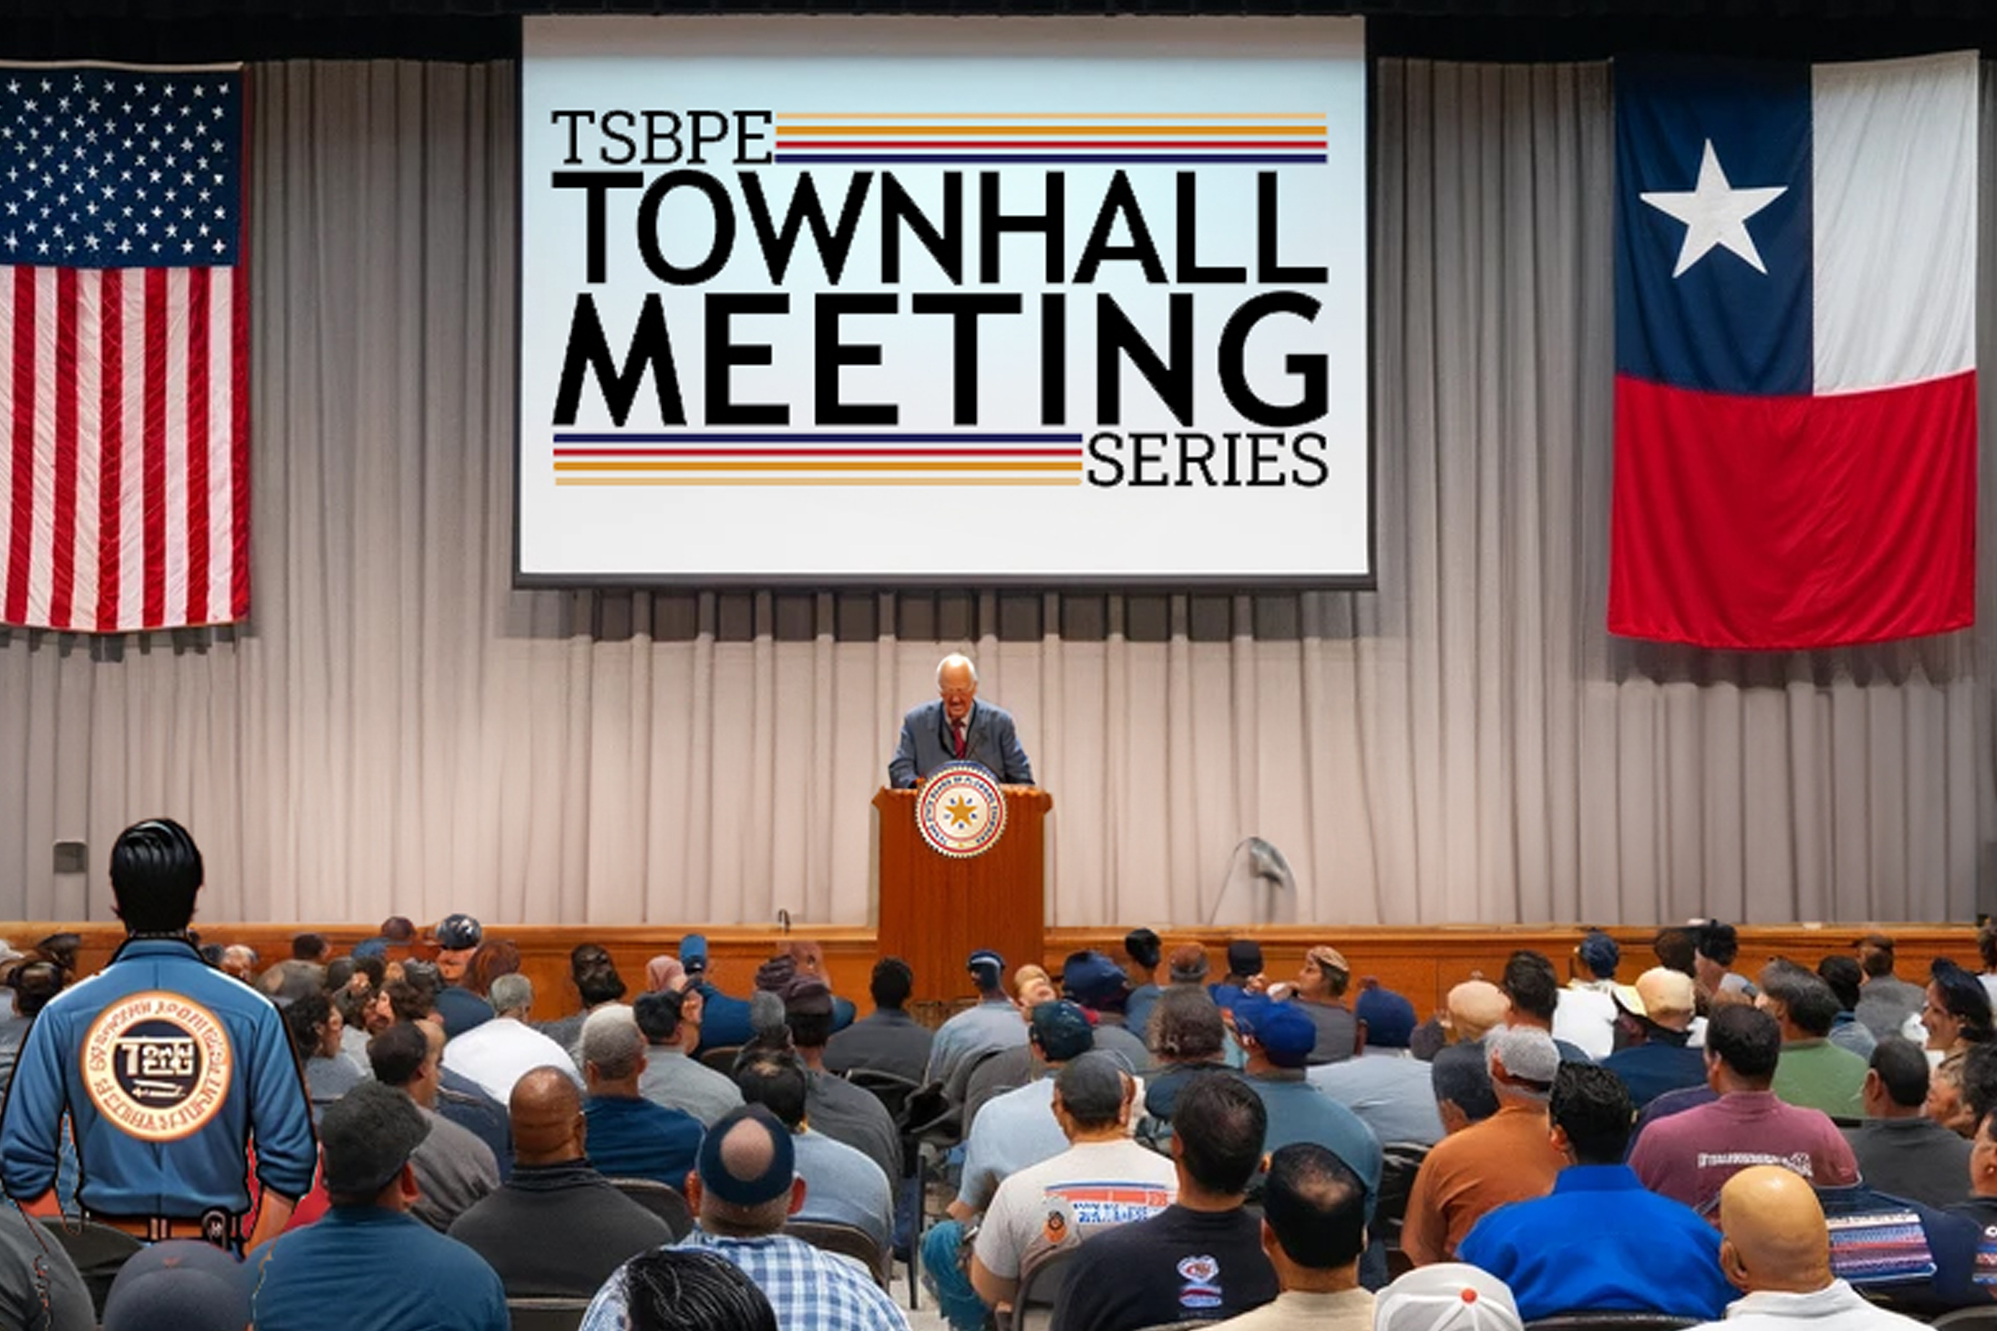 TSBPE Townhall Meeting Series